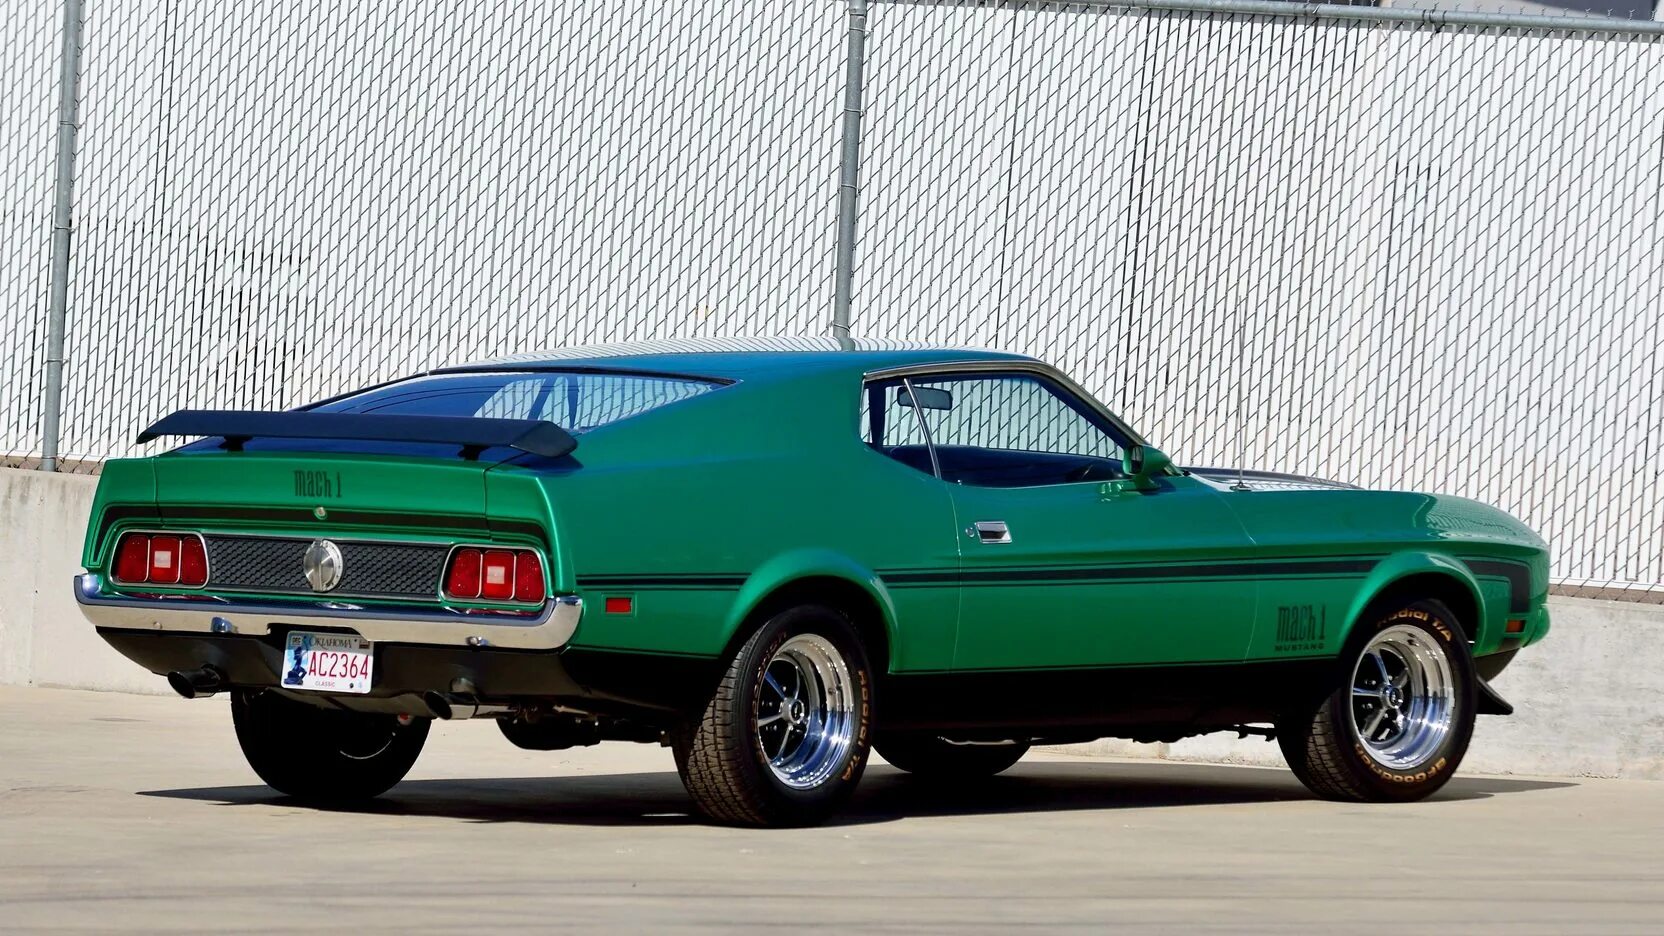 Ford Mustang Mach 1. Форд Мустанг 1971. Ford Mustang 1971 Mach 1 Fastback. Mac 1 1971 Fastback. Fast back